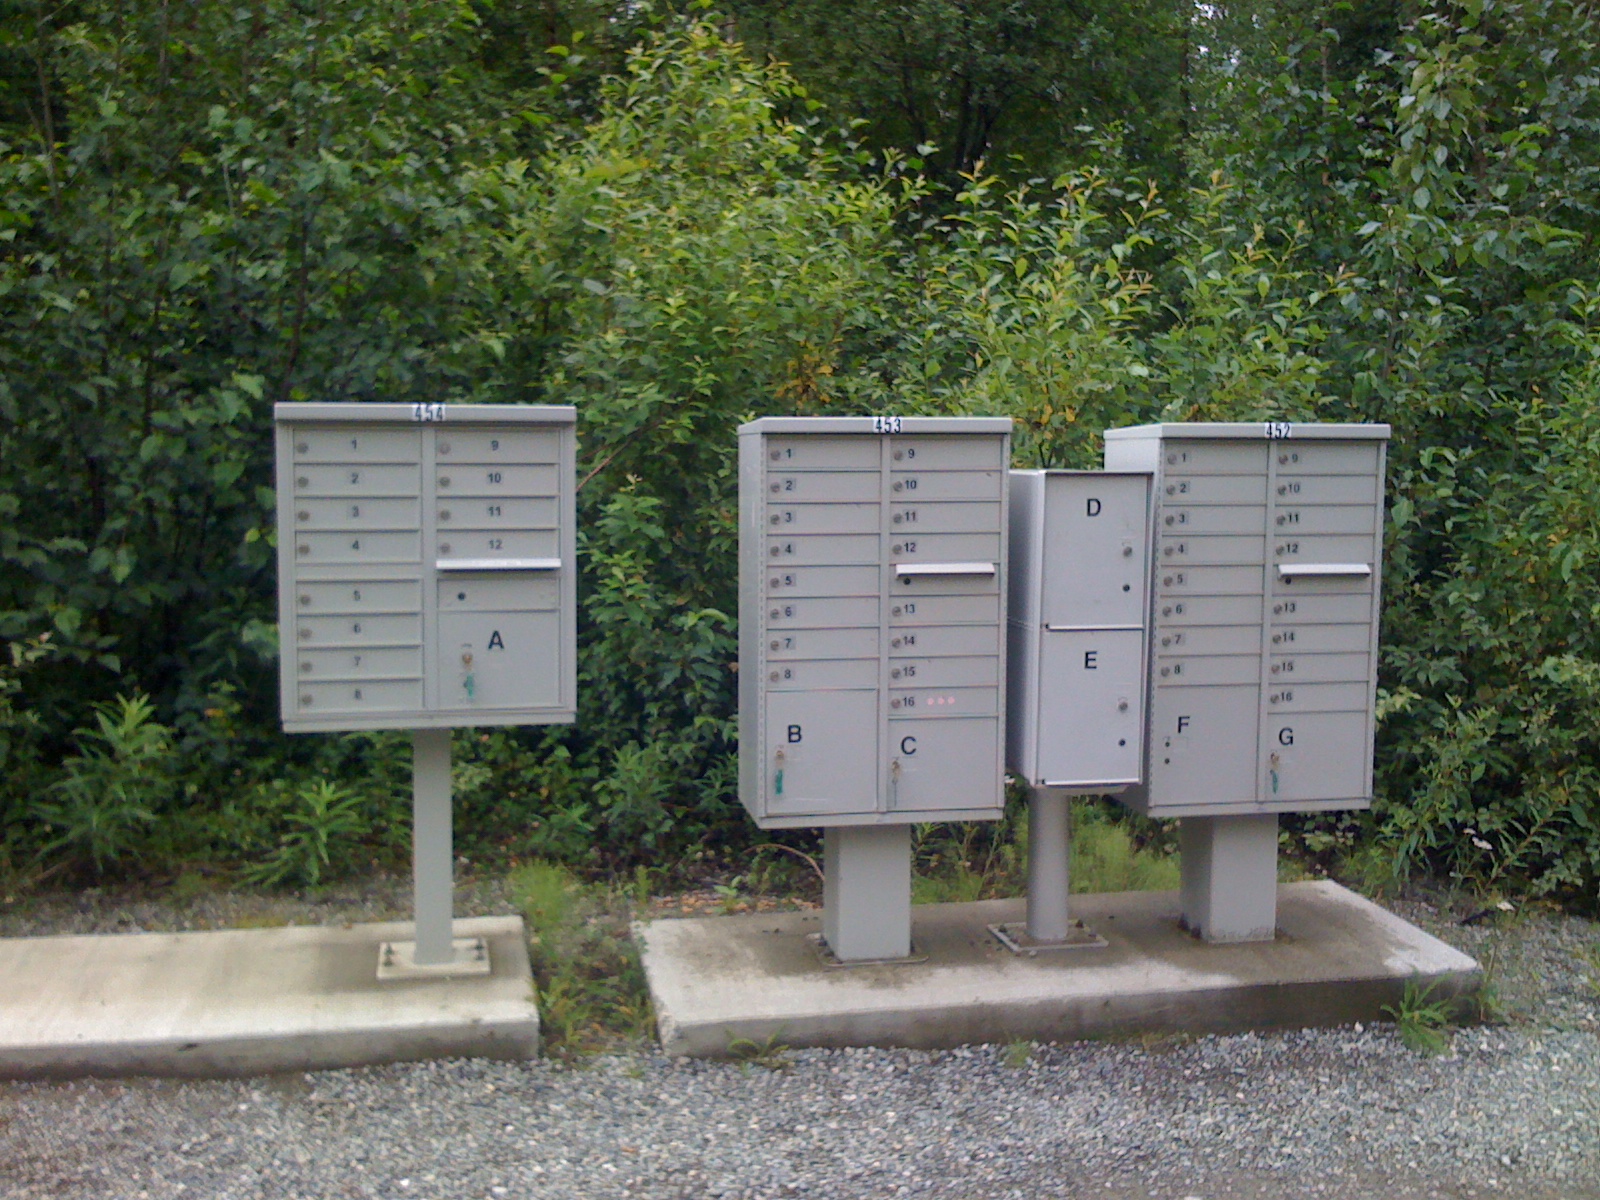 A set of mailboxes in Wasilla, Alaska.